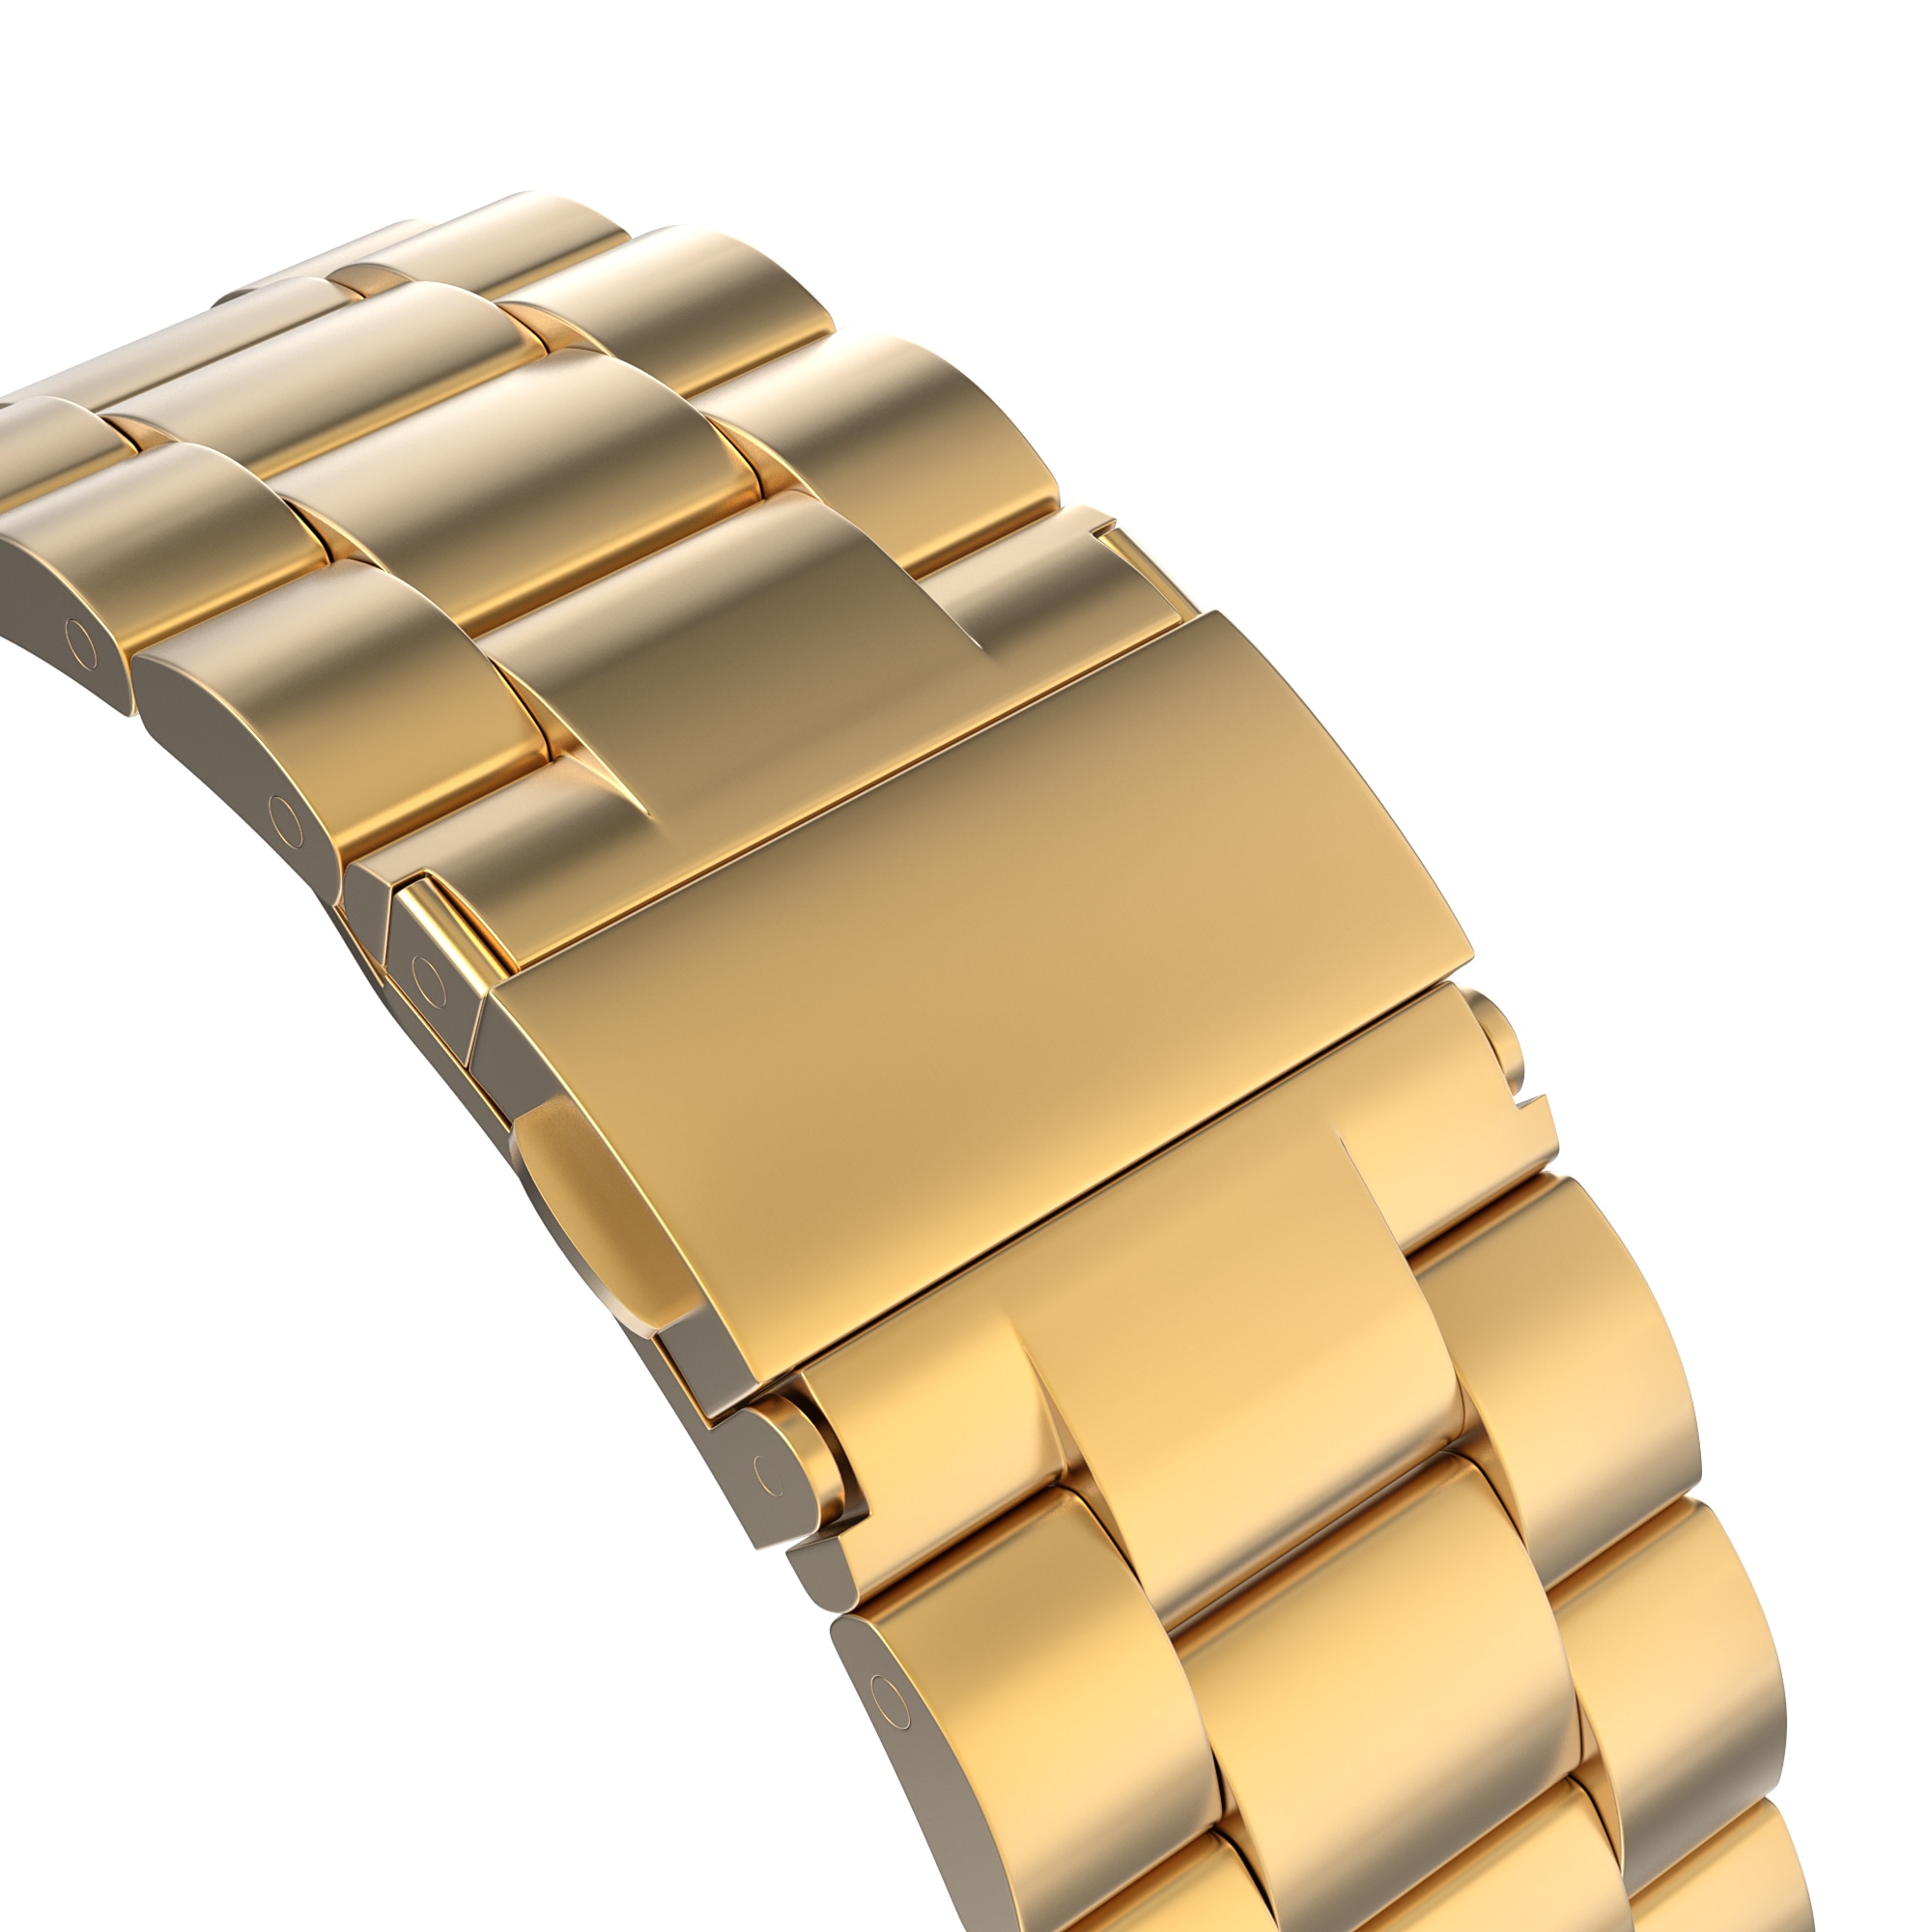 Apple Watch SE 40mm Stilrent länkarmband i metall, guld